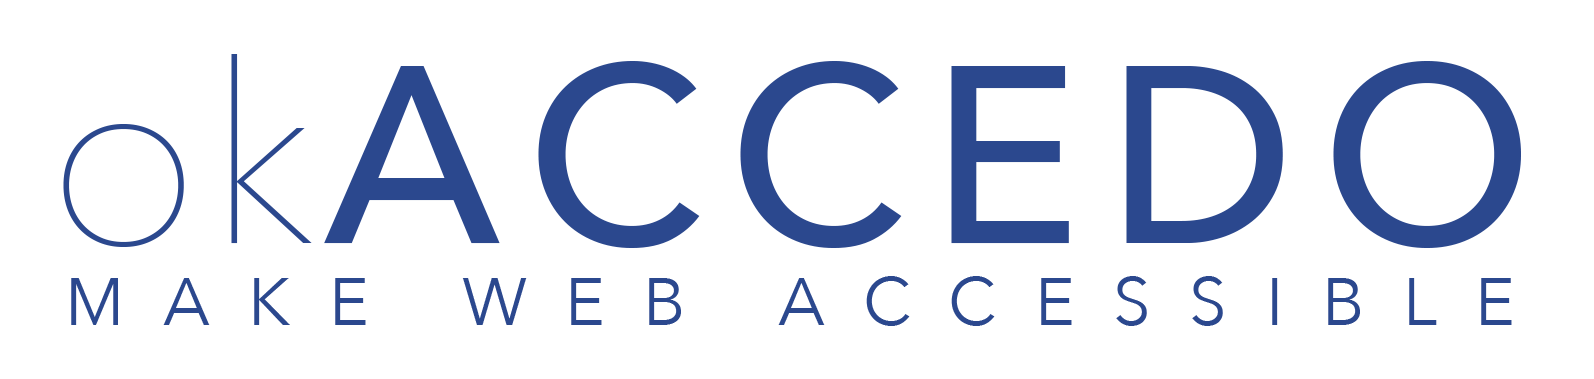 image - logo. Image in the text: okACCEDO make web accessible